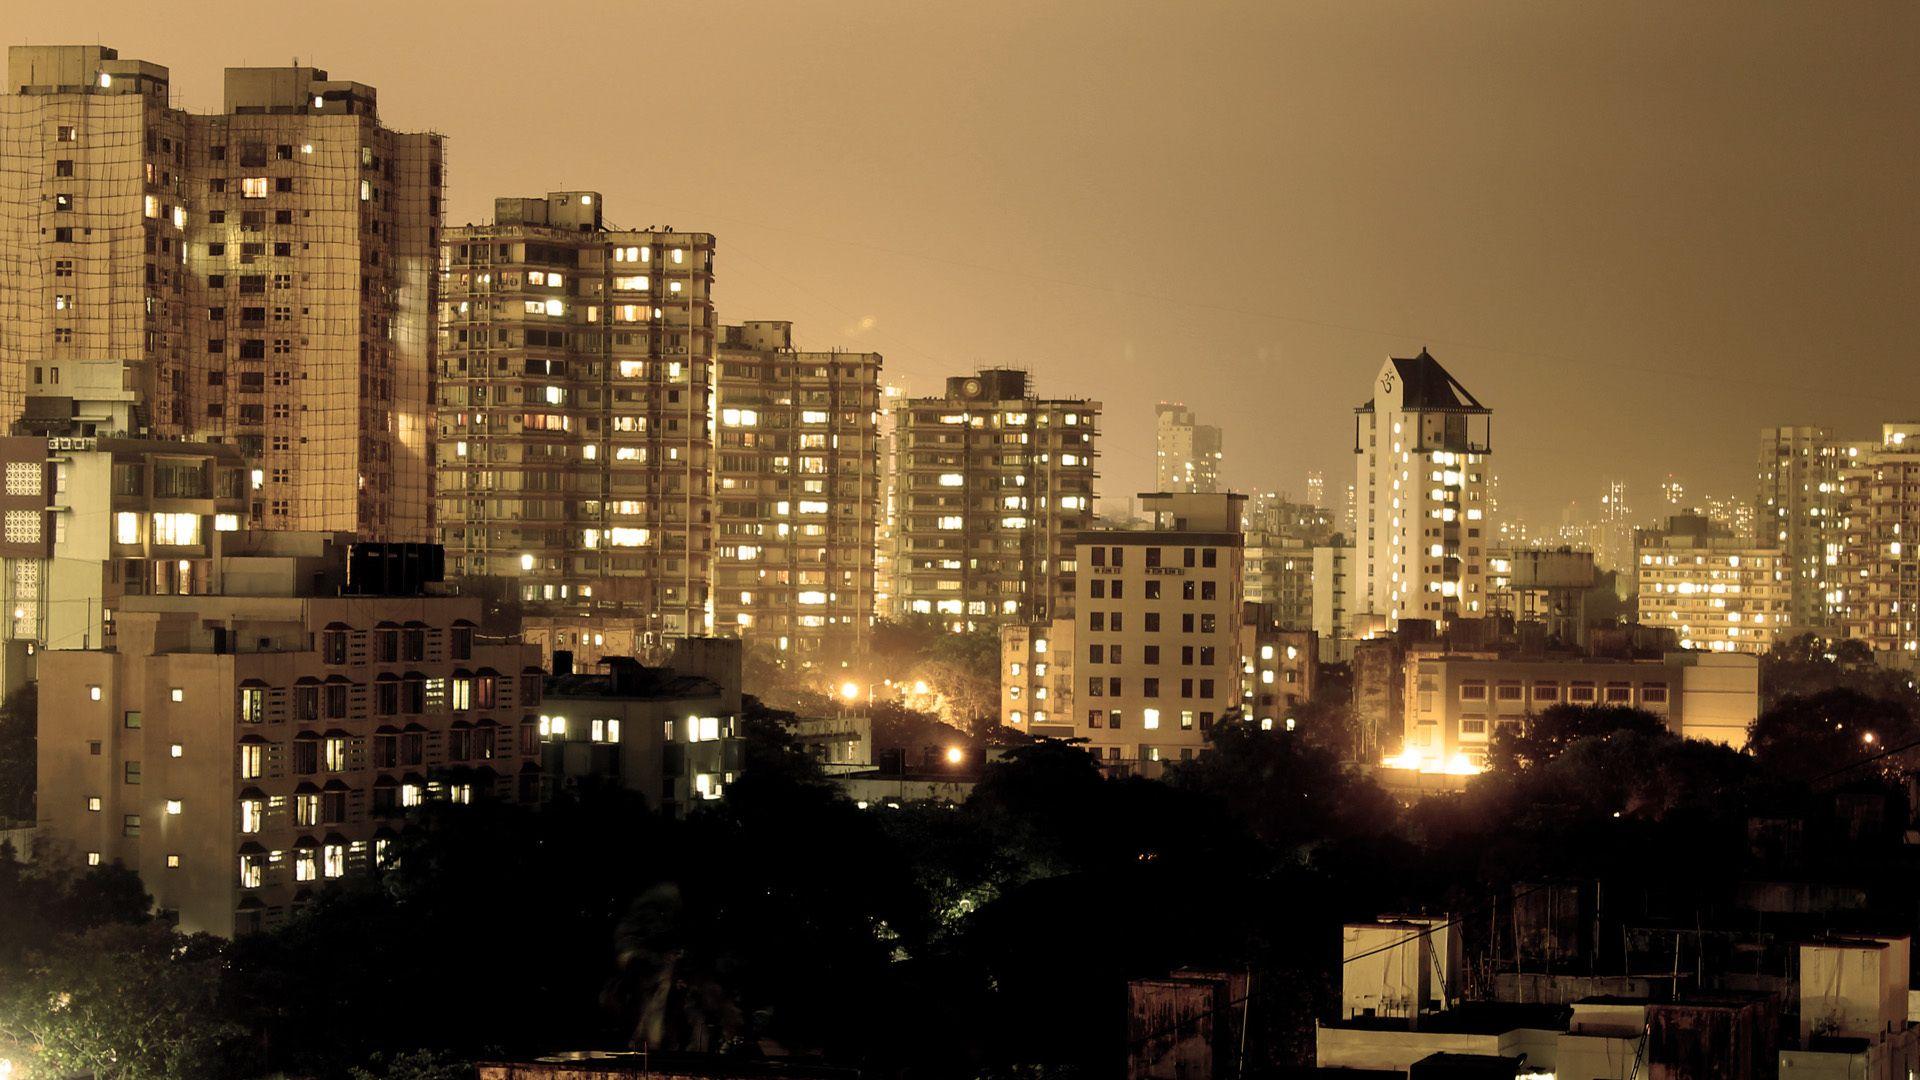 Night city Mumbai wallpaper and image, picture, photo